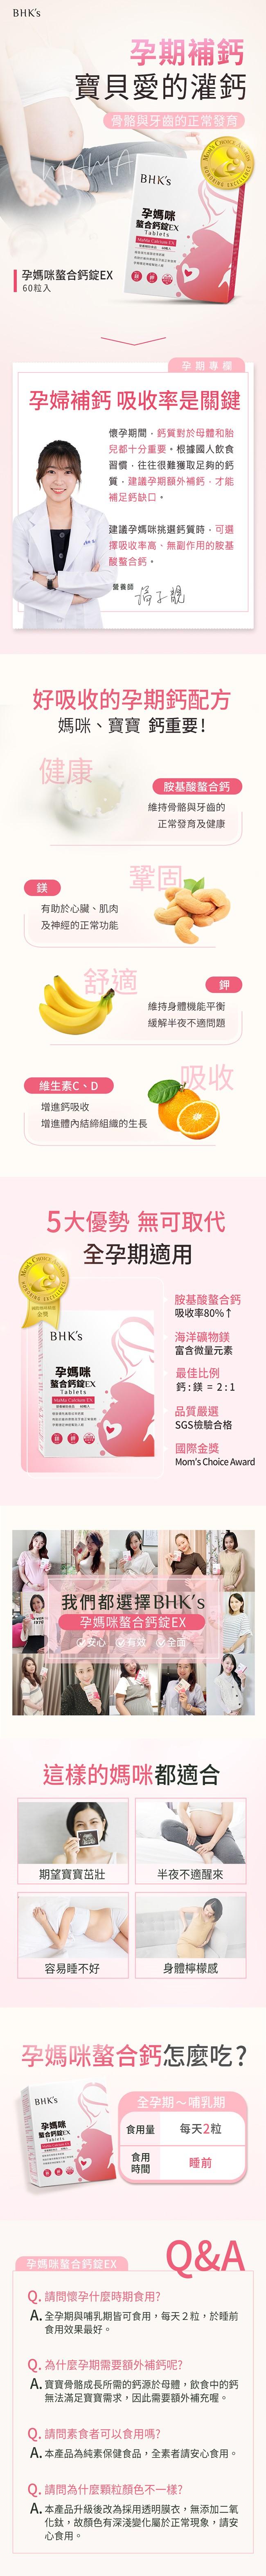 BHK's-孕媽咪螯合鈣錠EX(60粒/盒)﻿產品資訊